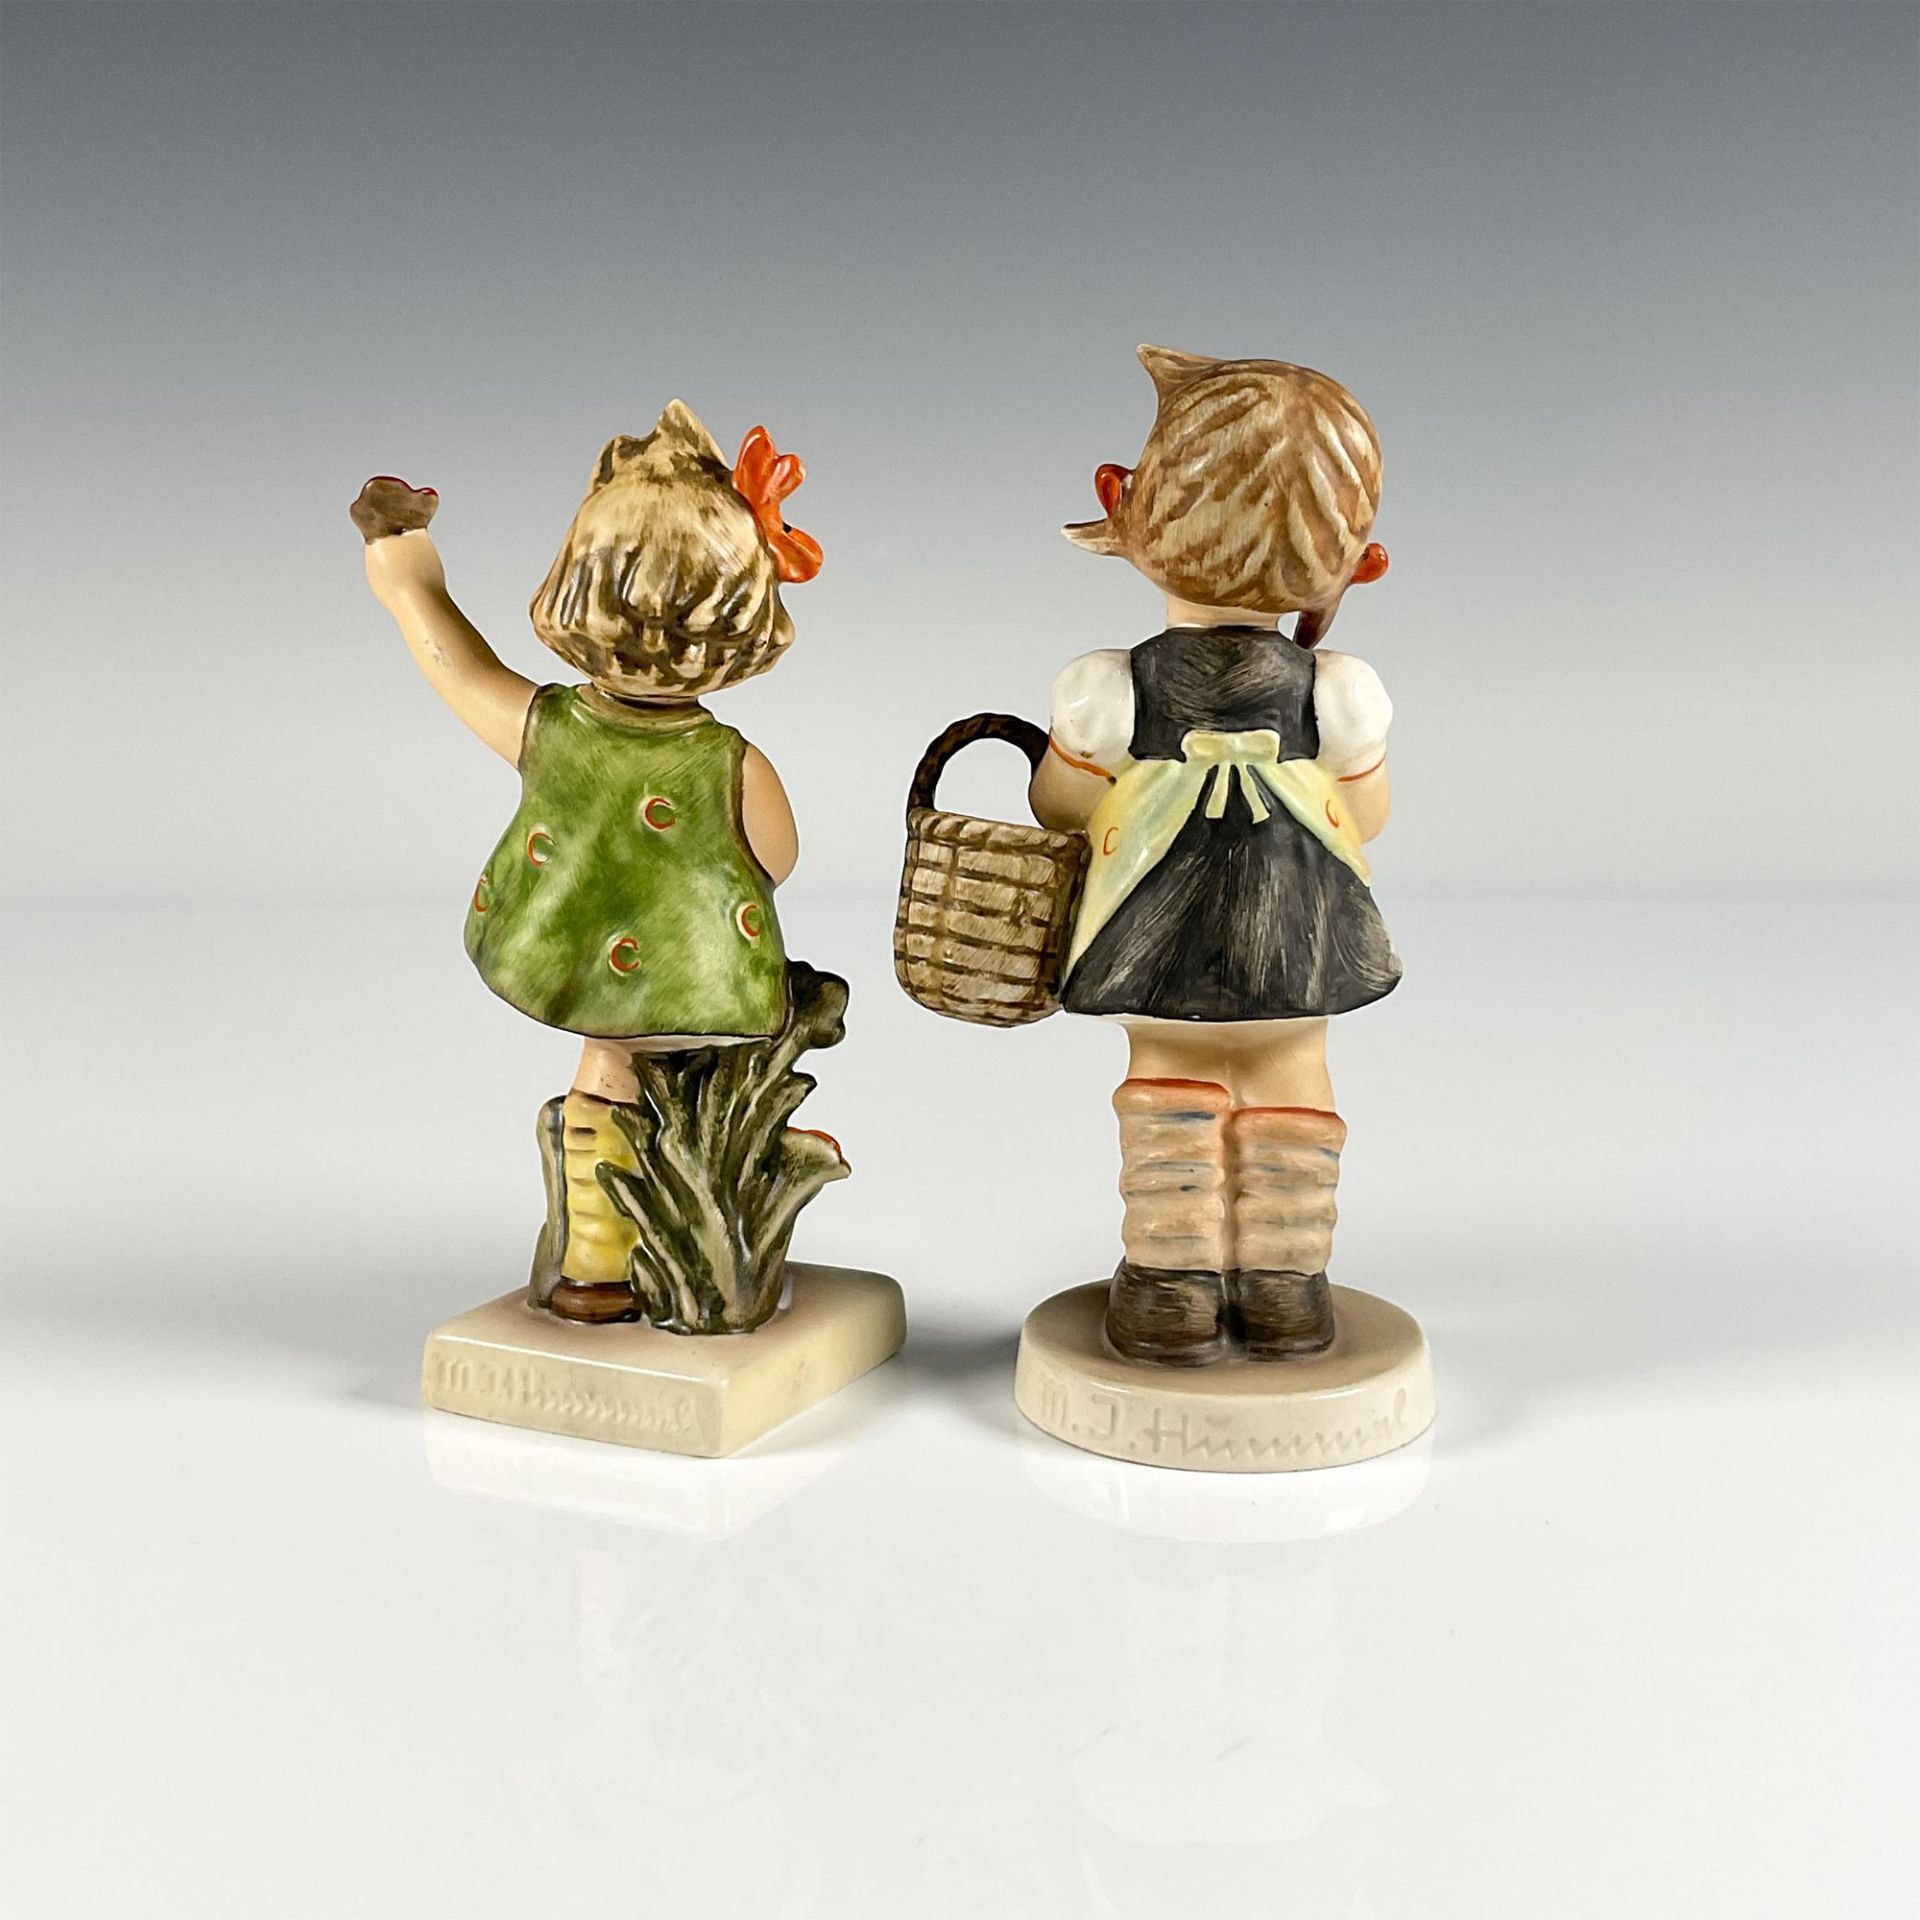 2pc Goebel Hummel Figurines, Sister, Spring Cheer - Image 2 of 3